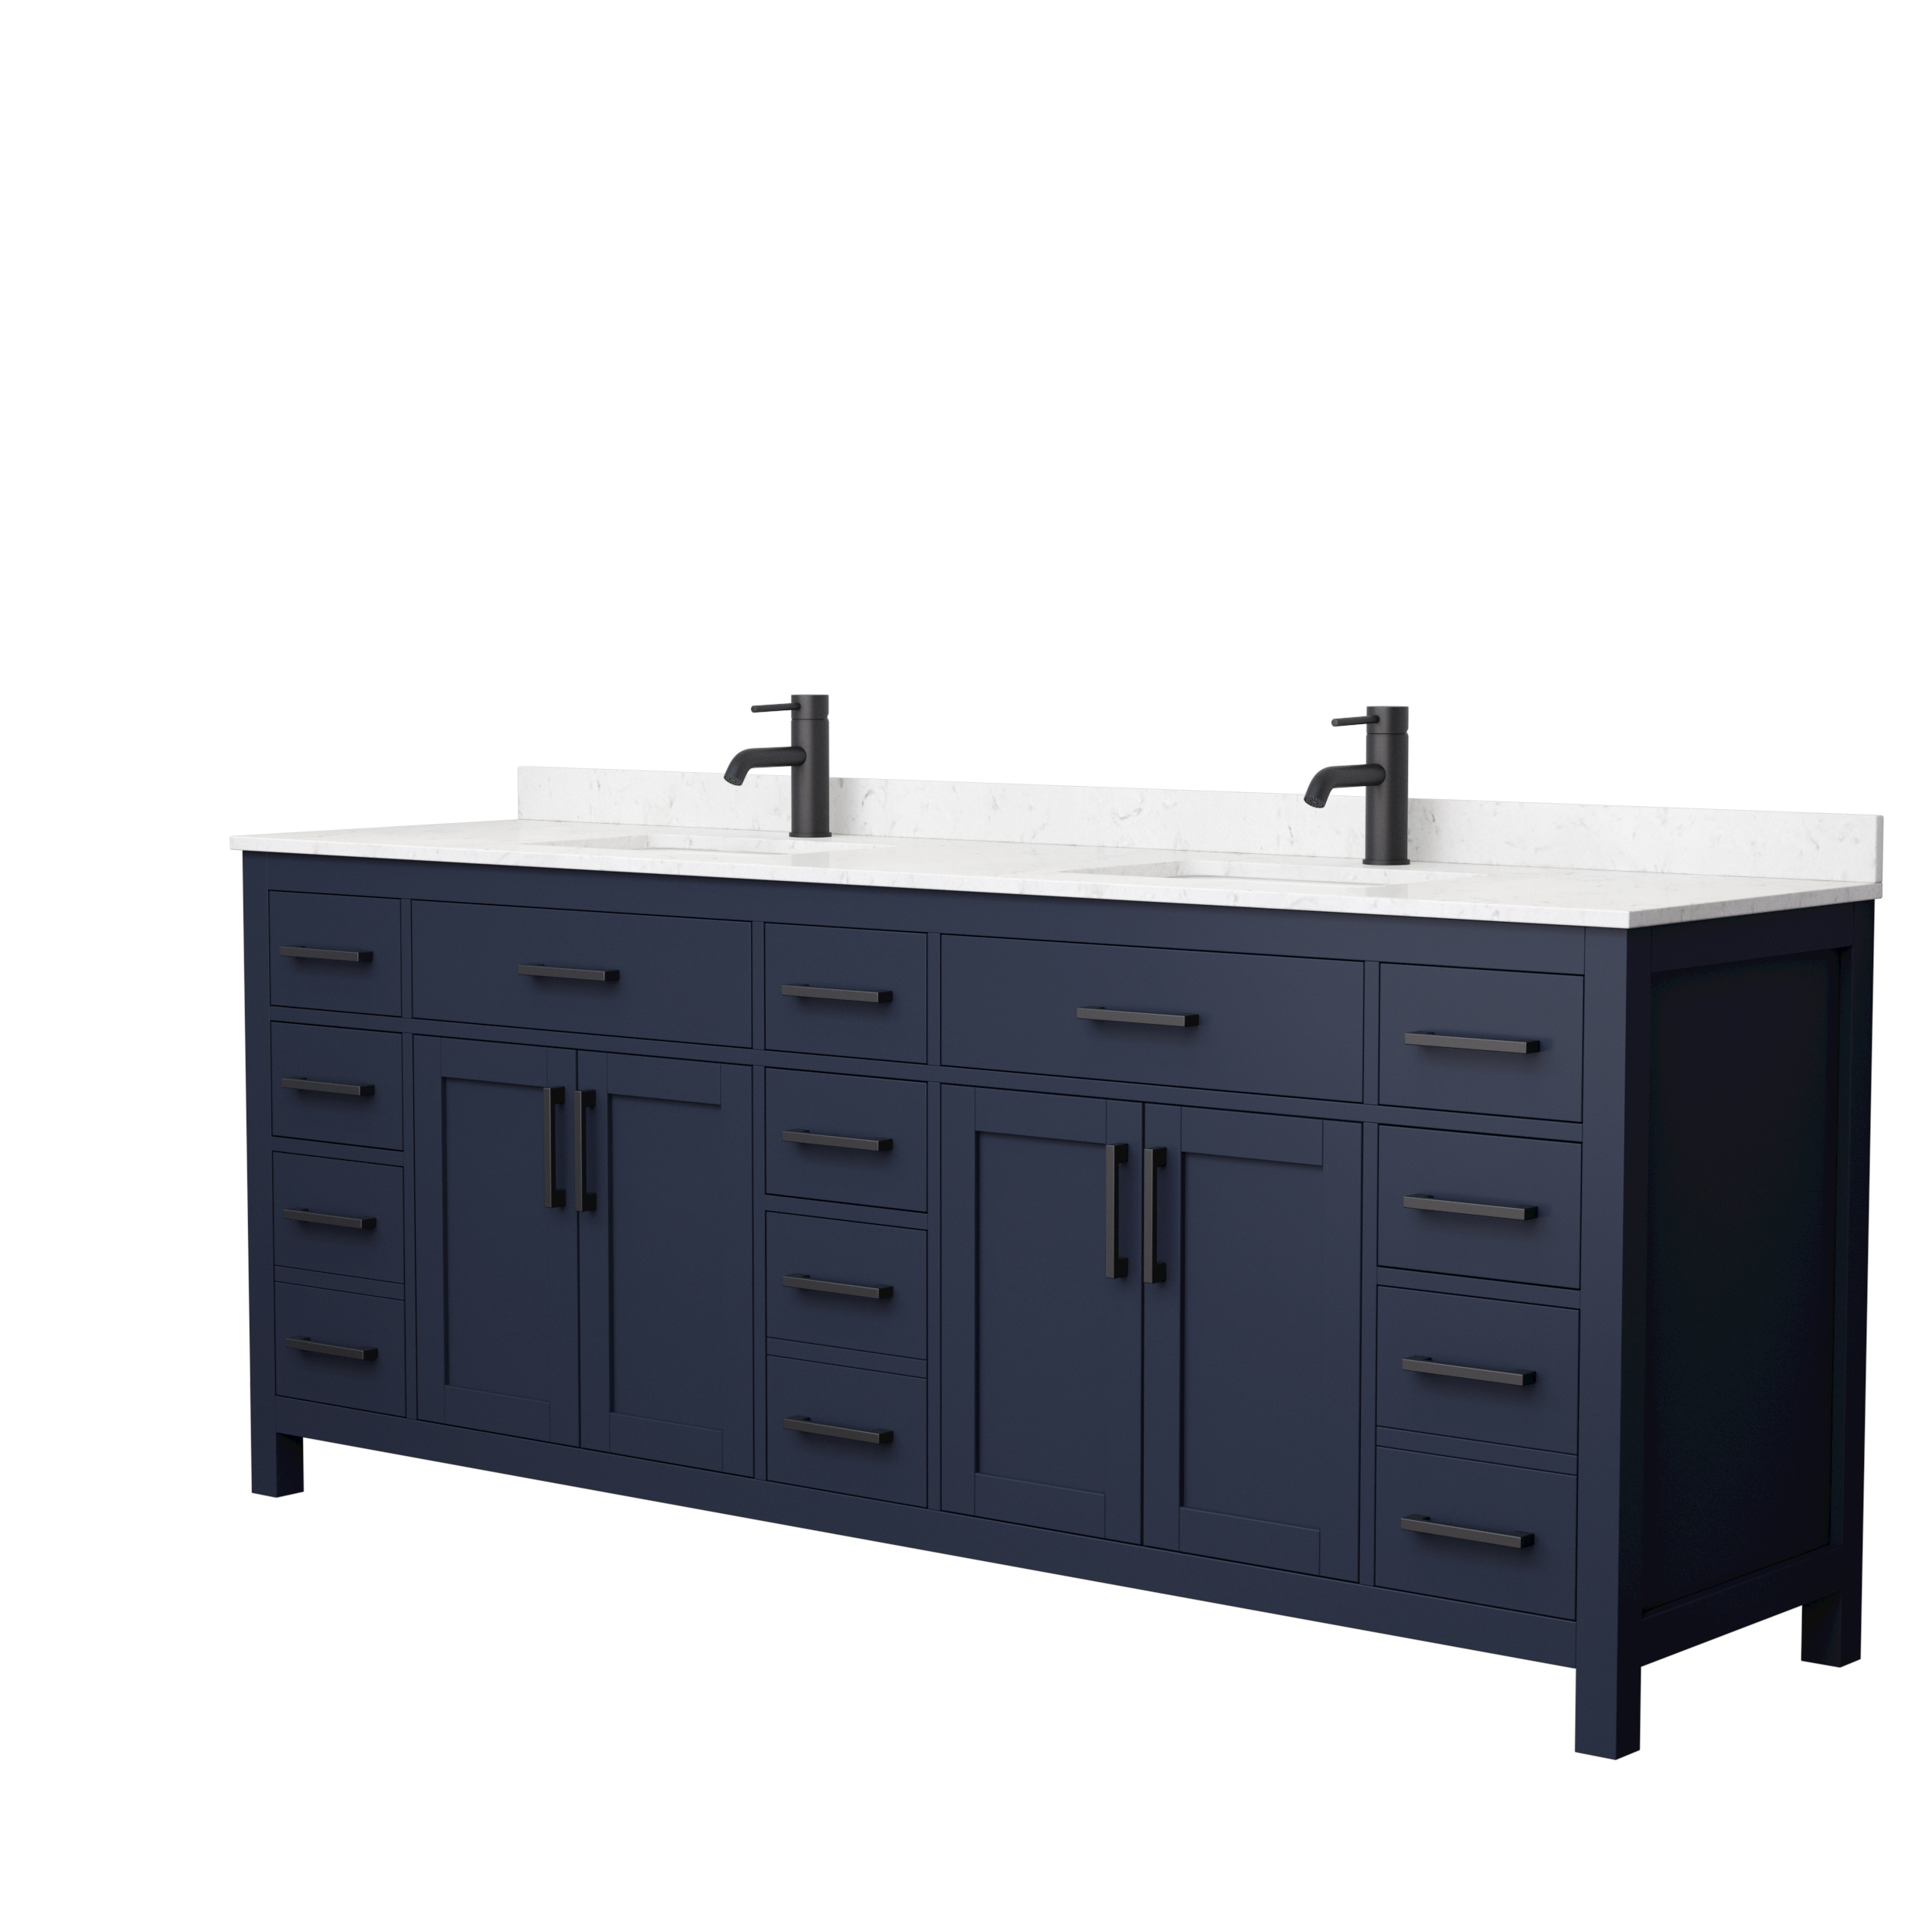 84" Double Bathroom Vanity in Dark Blue, Carrara Cultured Marble Countertop, Undermount Square Sinks, Matte Black Trim